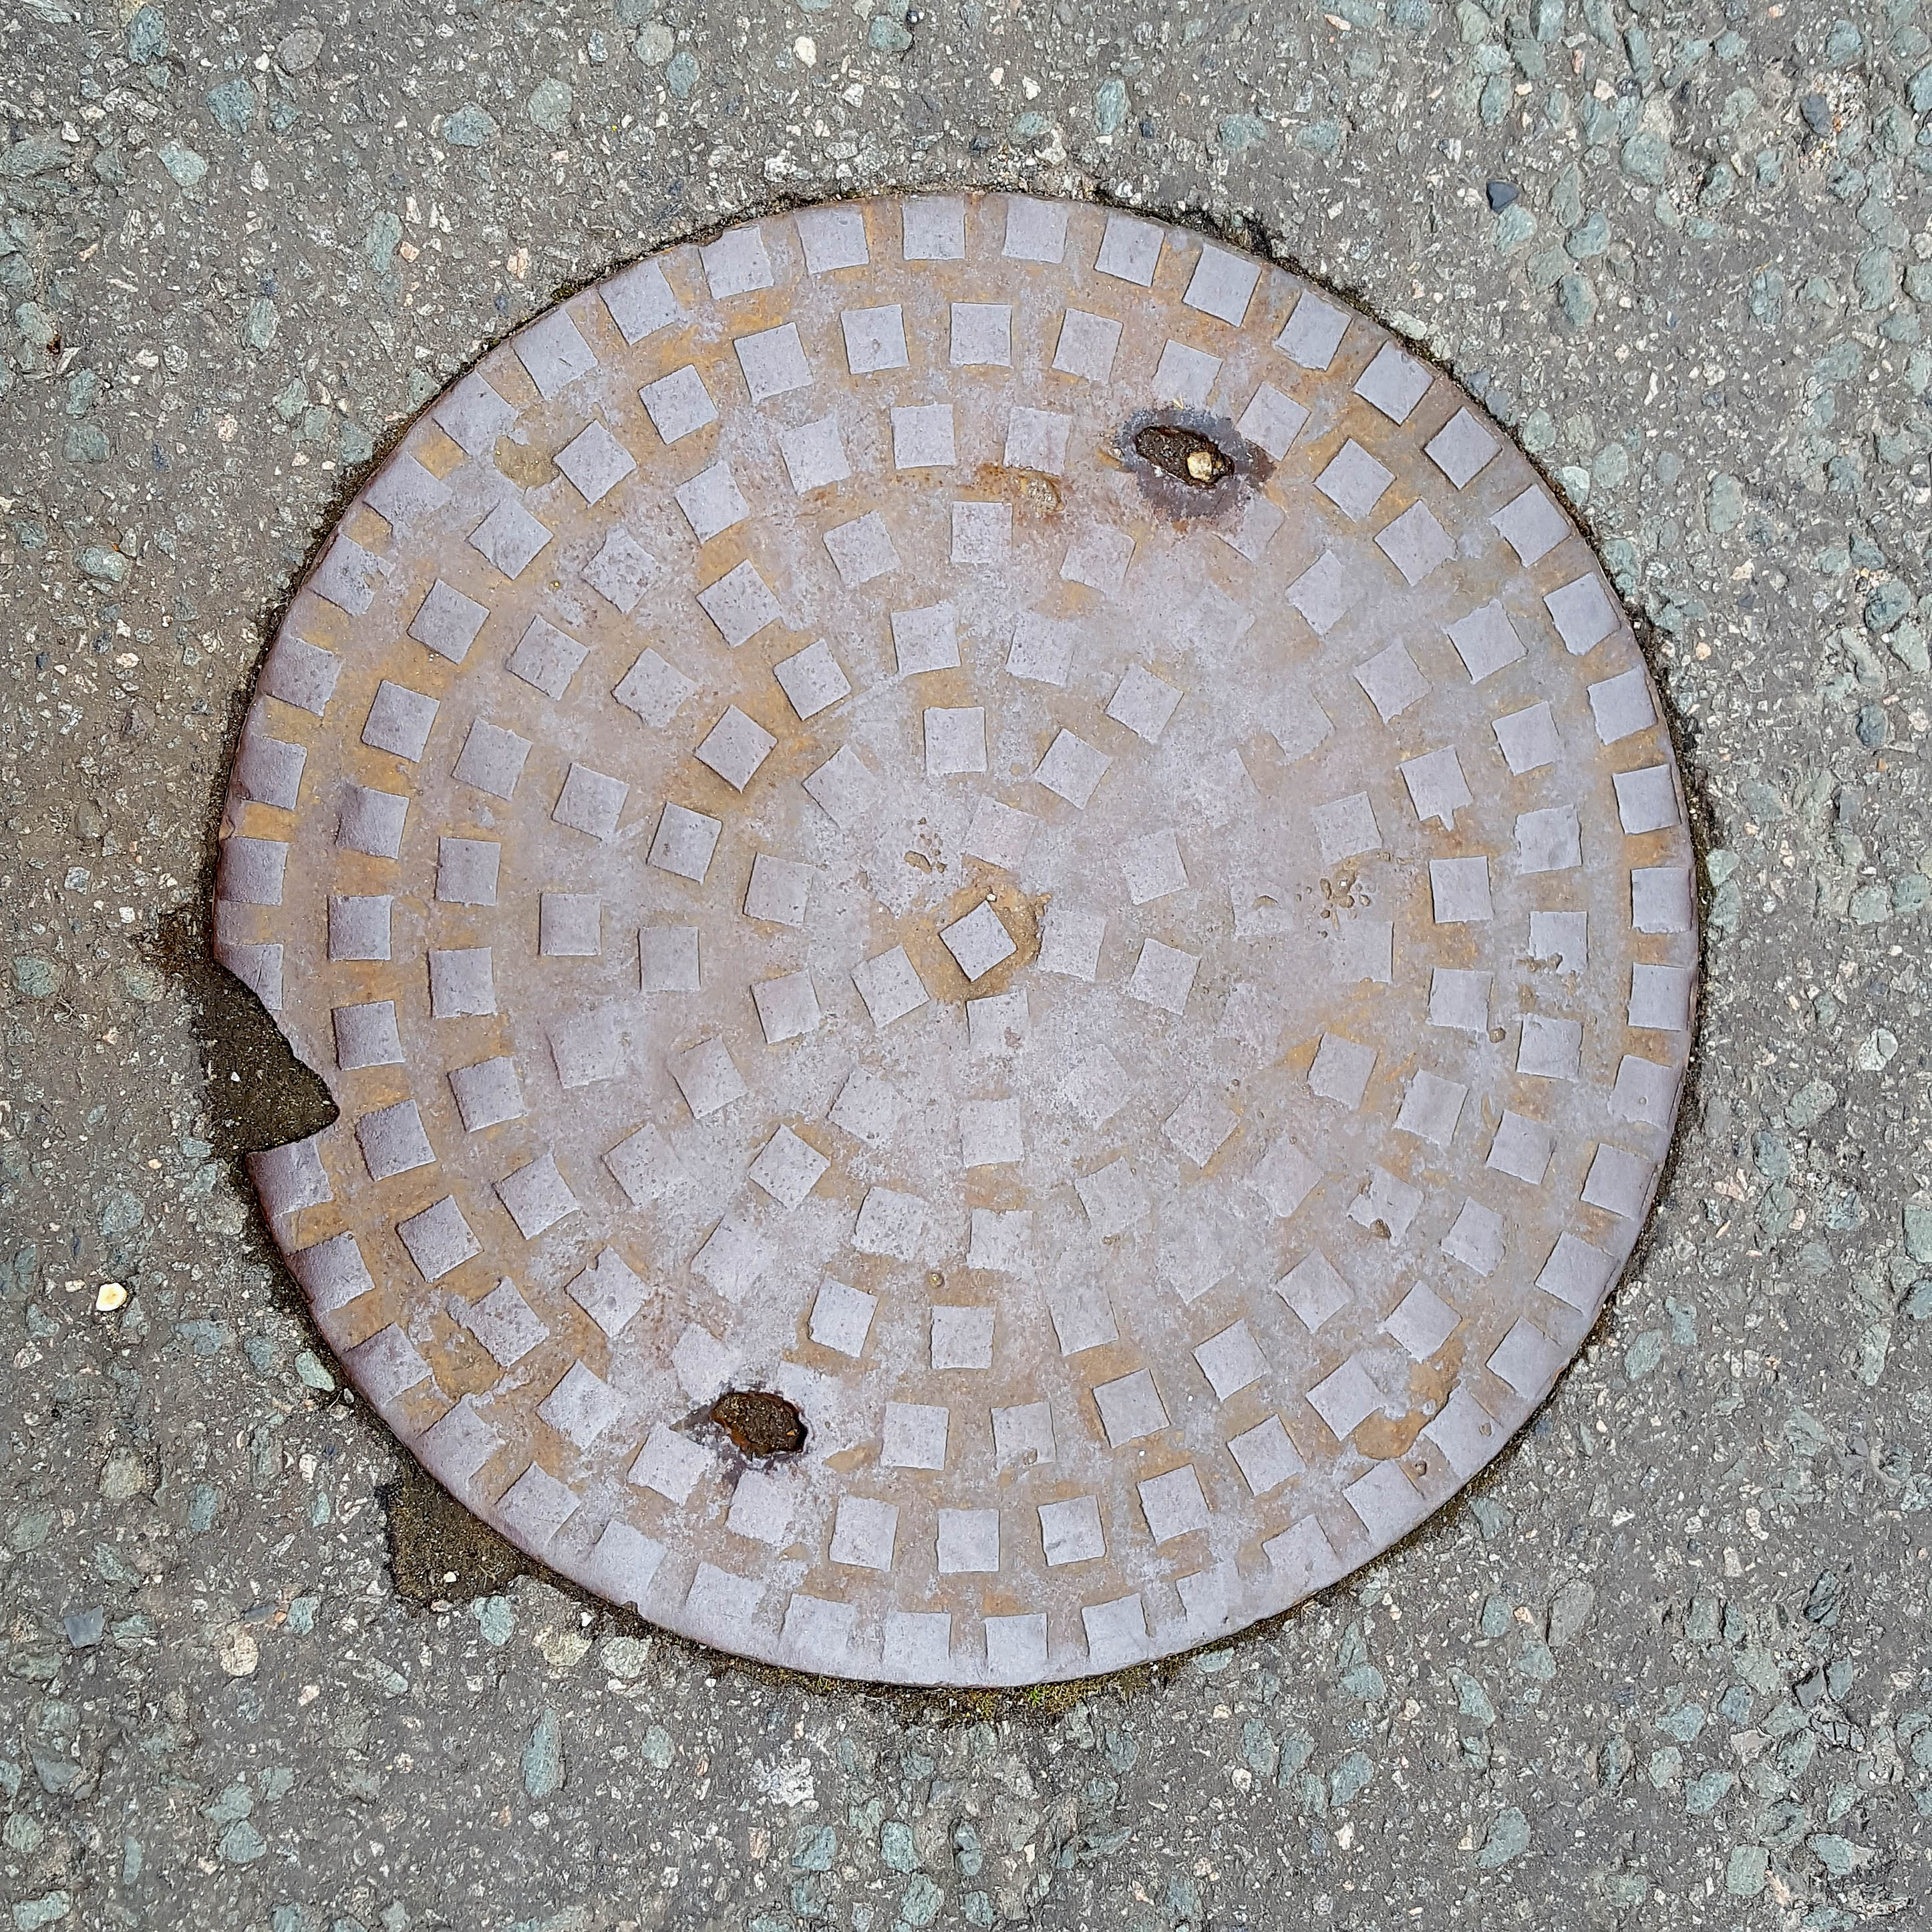 Manhole cover, London - Cast iron with graduated raised squares